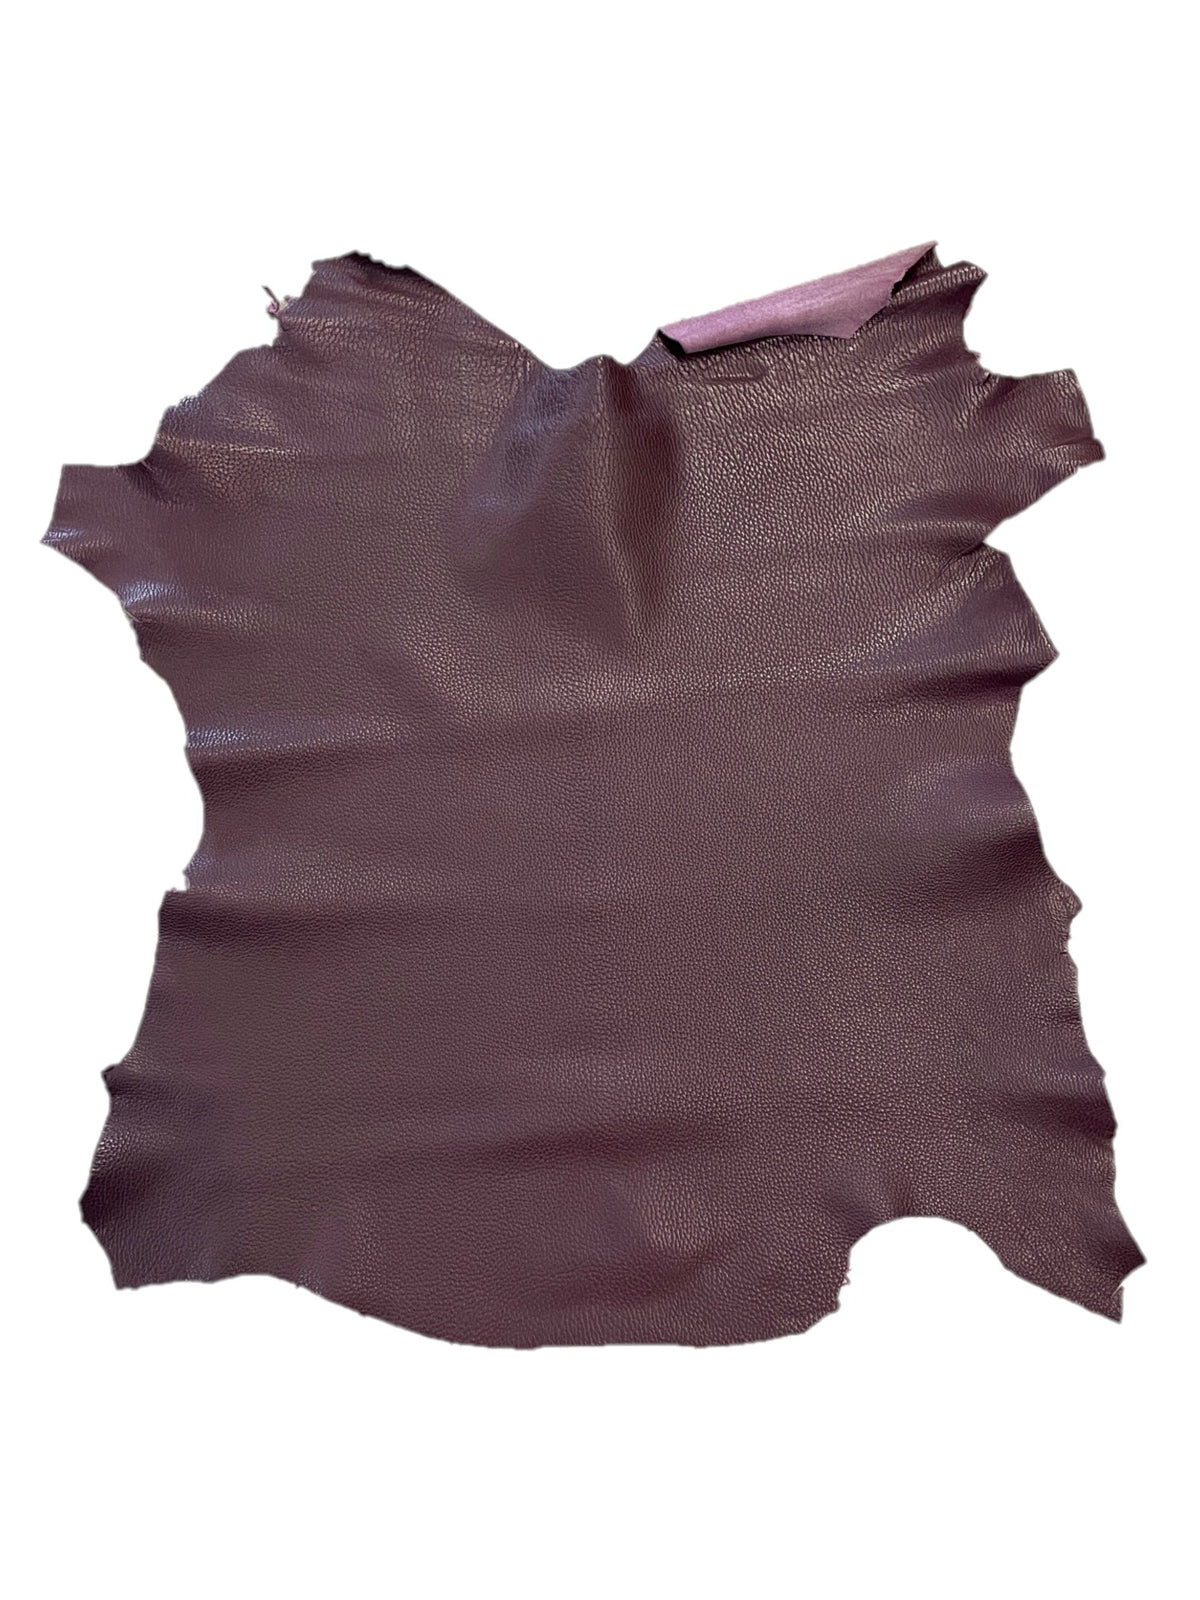 Purple Pebbled Calf Skin | 1.2mm | 6 sq.ft | $55 ea.